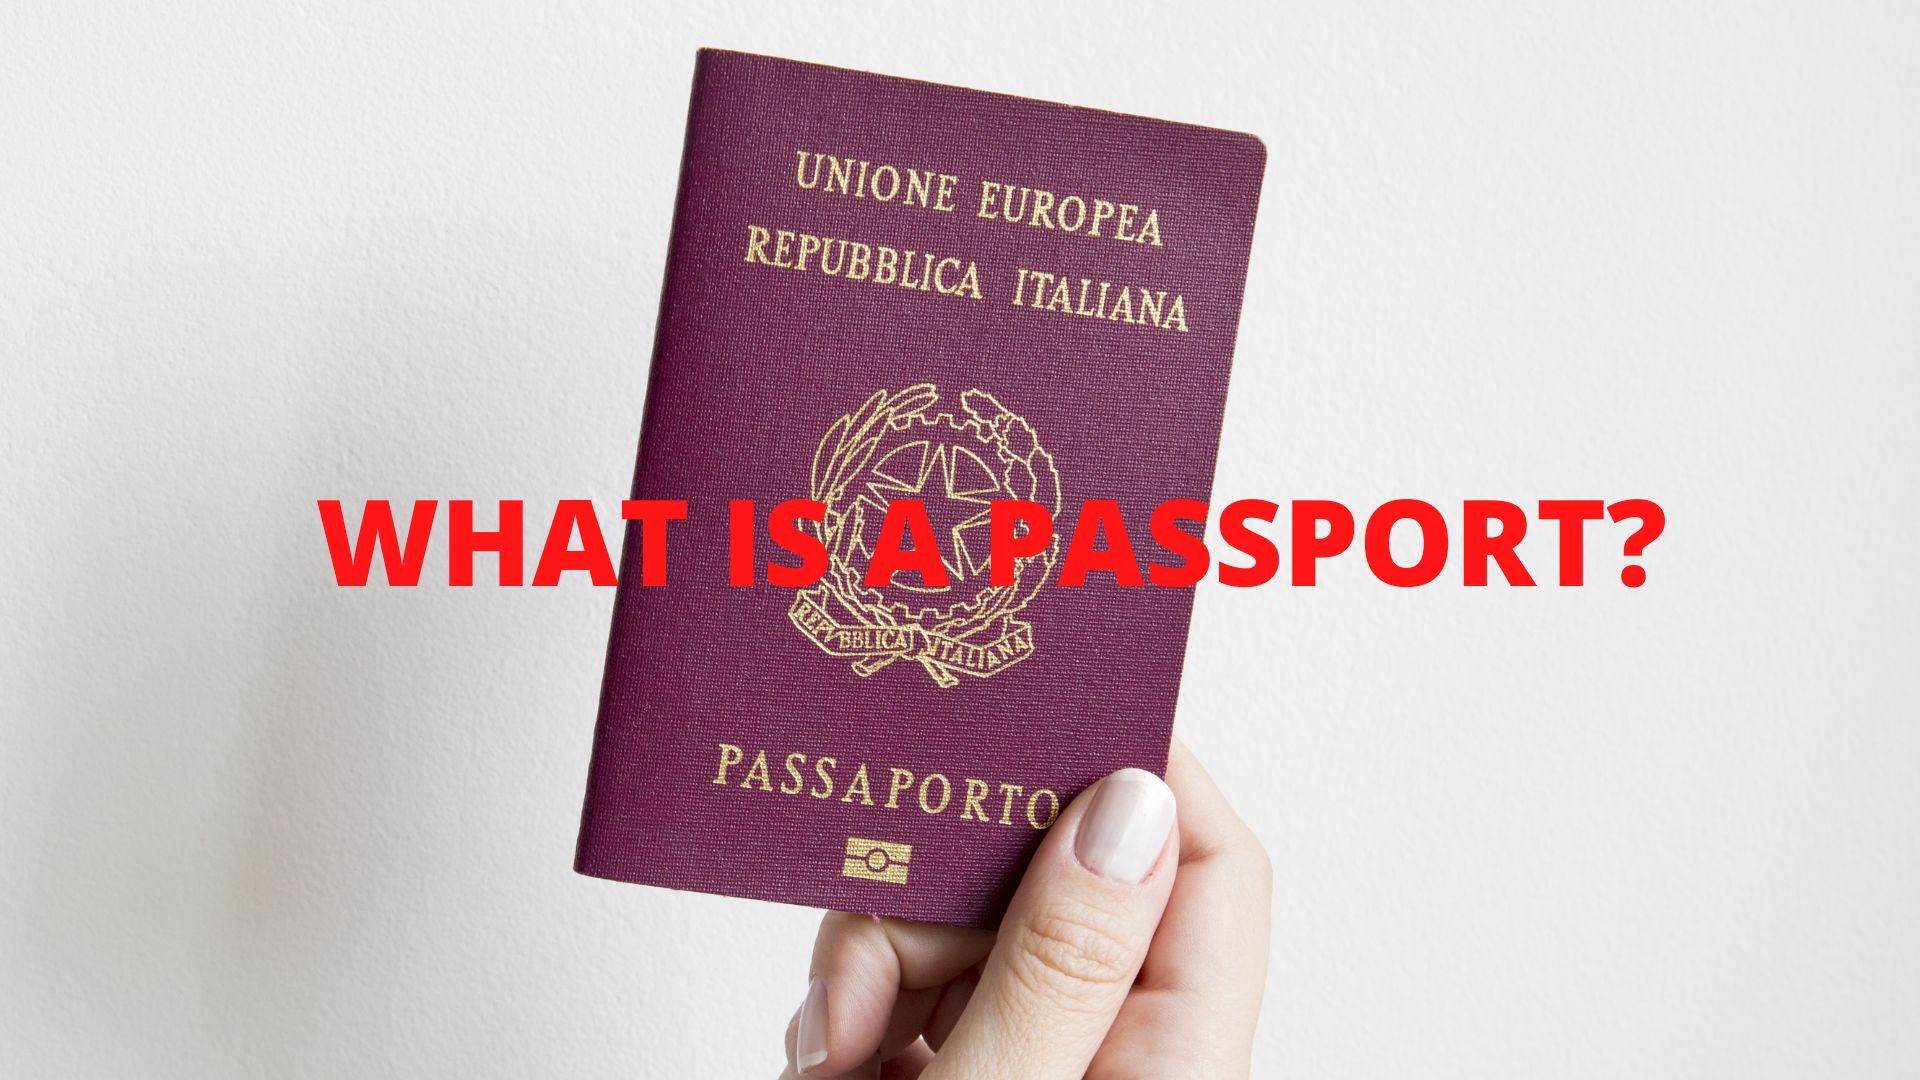 apply for passport